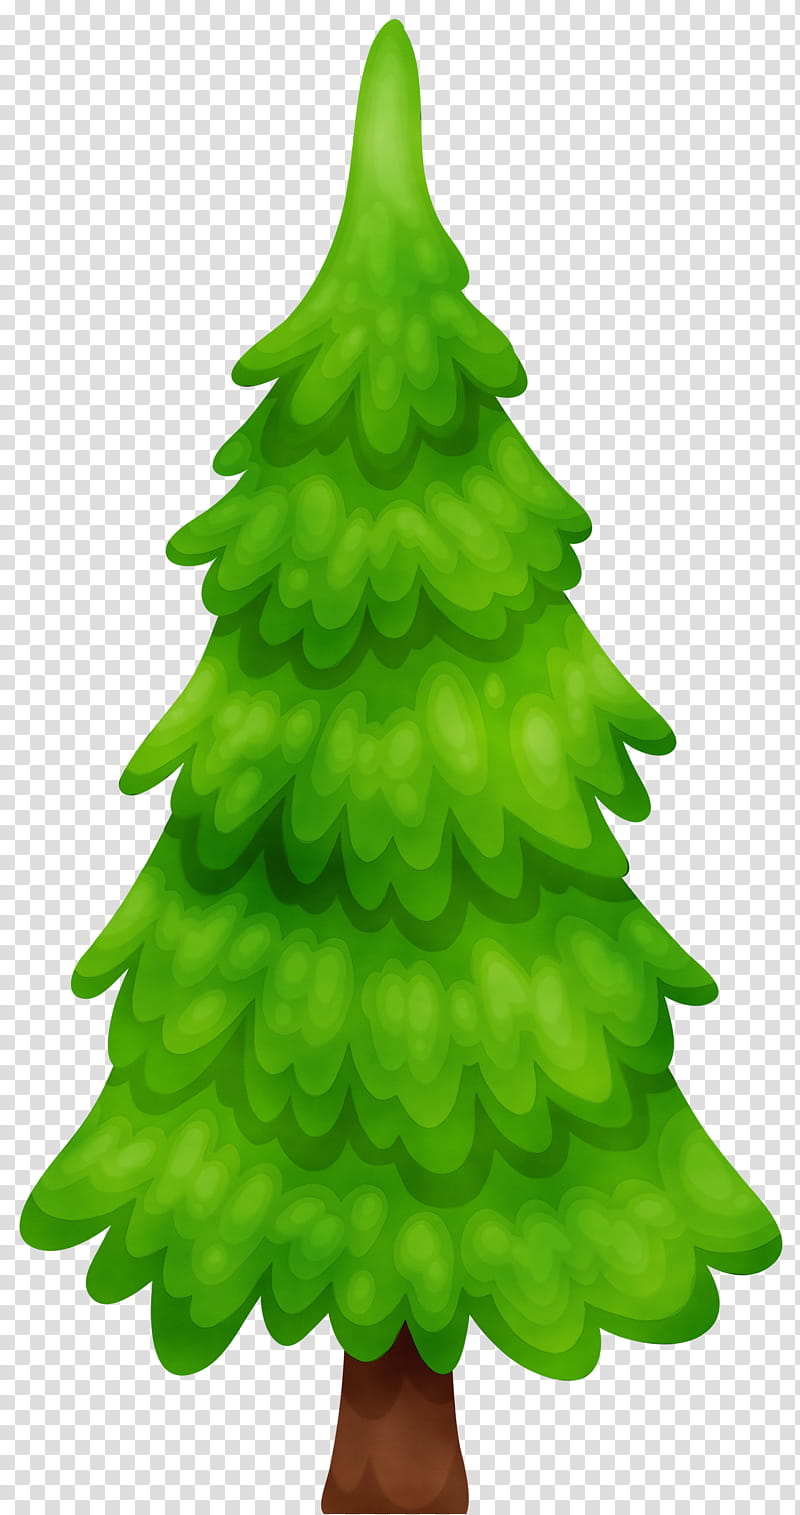 Cartoon Christmas Tree, Spruce, Fir, Pine, Christmas Day, Cartoon, Green, Colorado Spruce transparent background PNG clipart